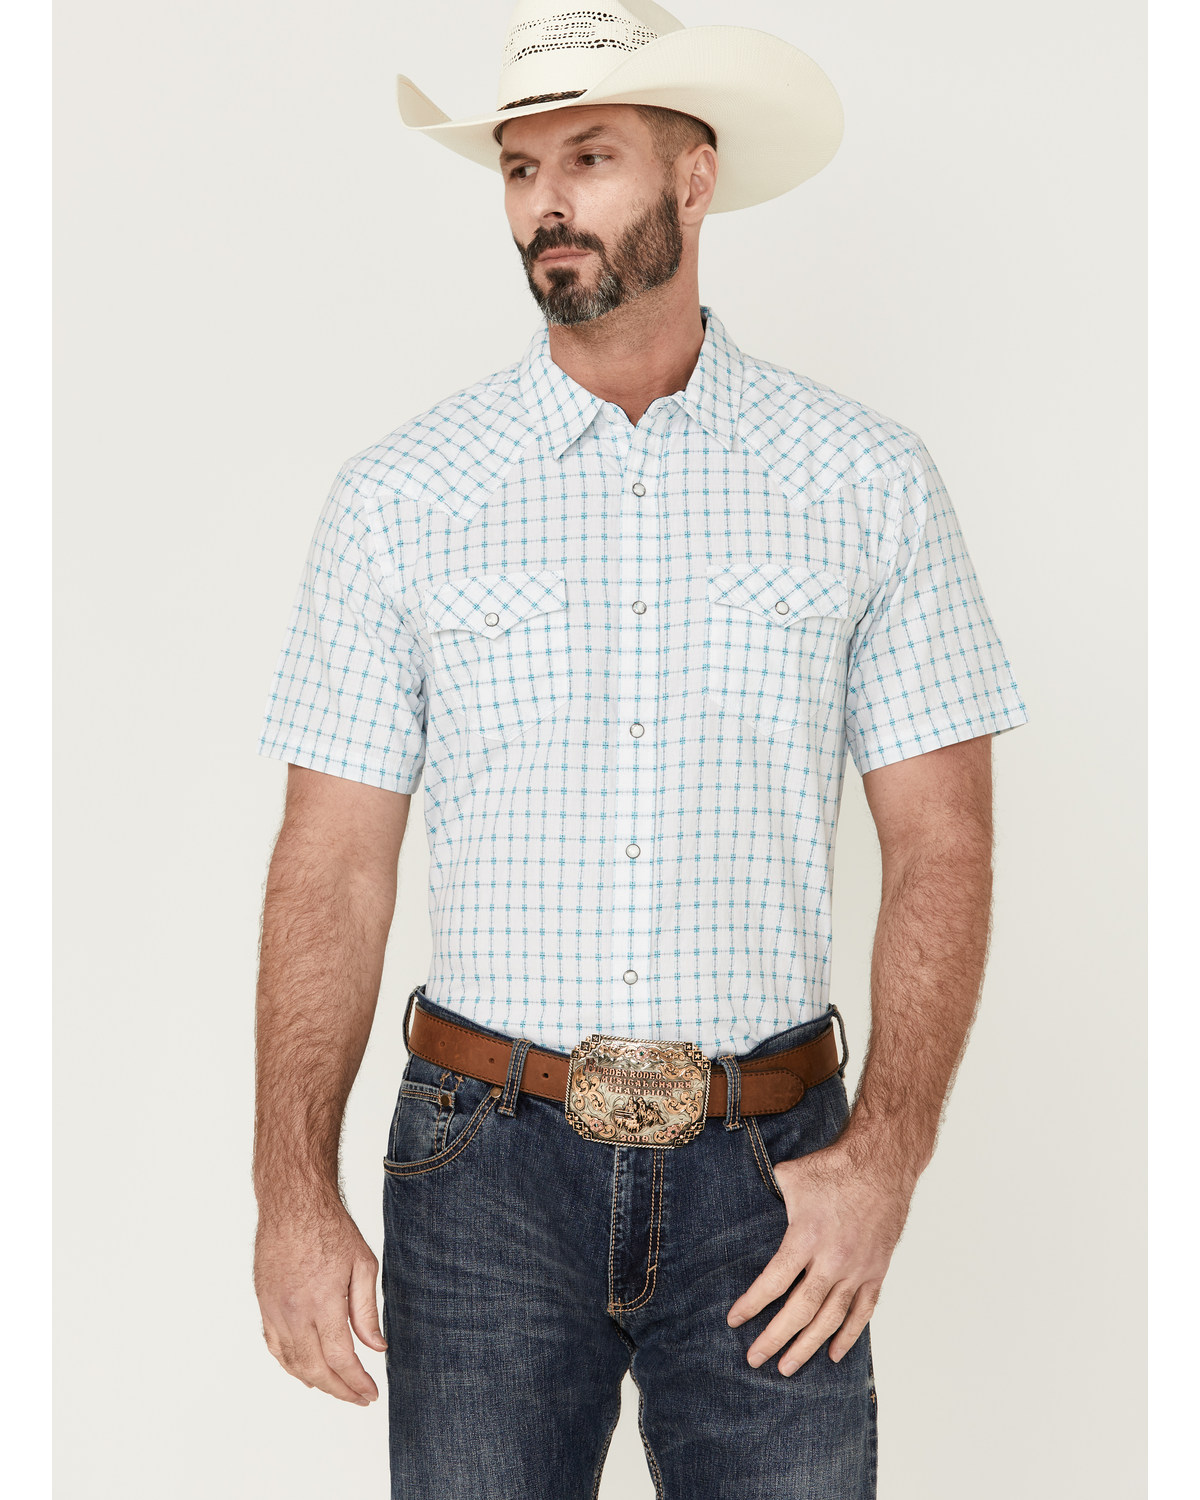 Moonshine Spirit Men's River Delta Small Plaid Short Sleeve Pearl Snap Western Shirt